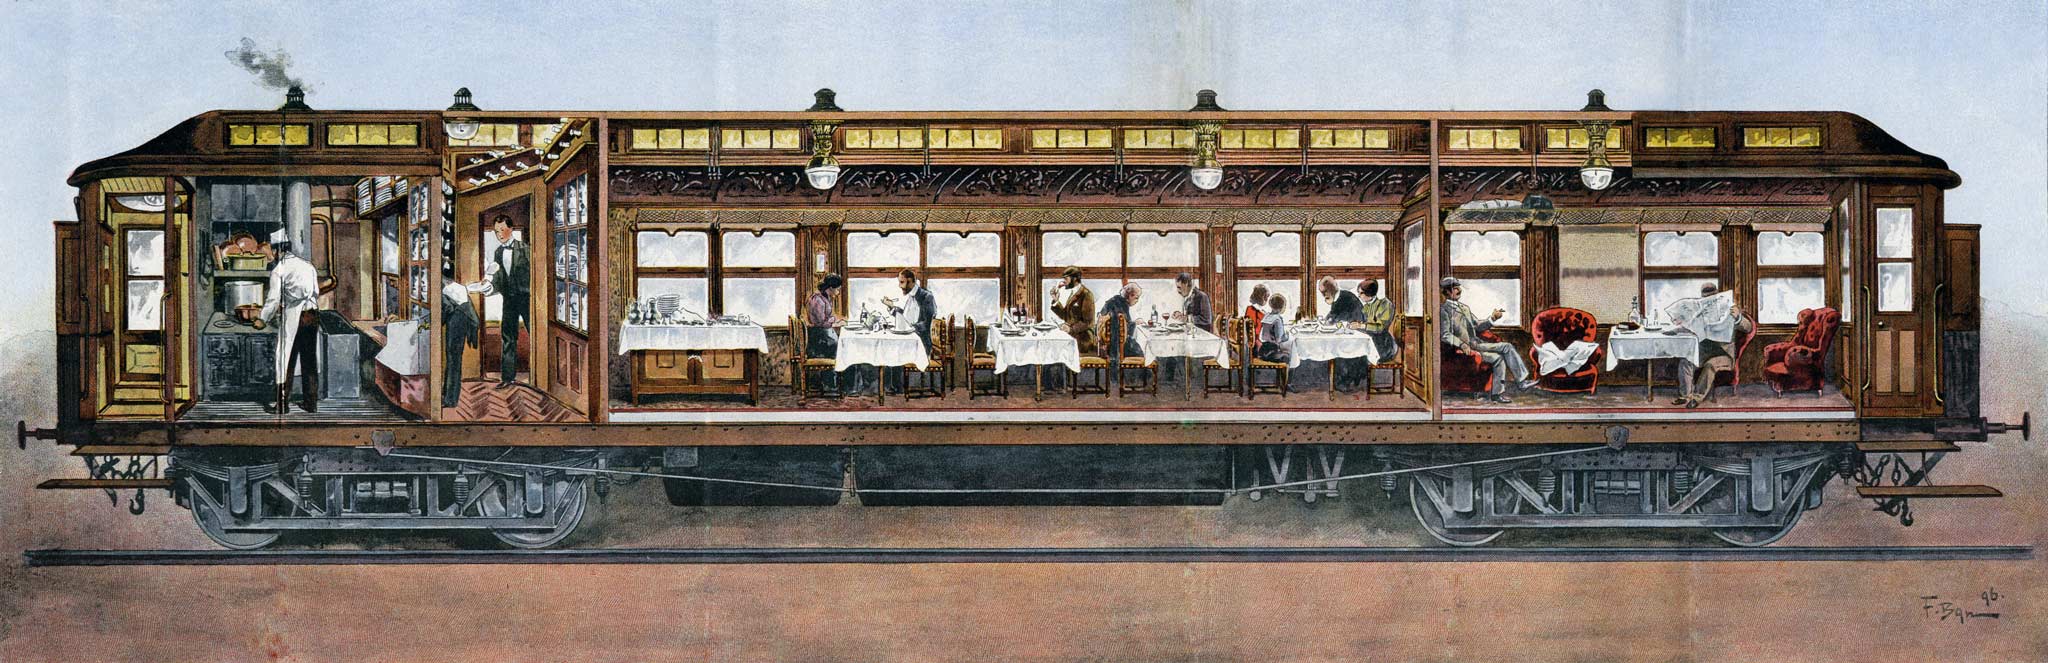 Dining car cross section, 1896 (collection Arjan den Boer)